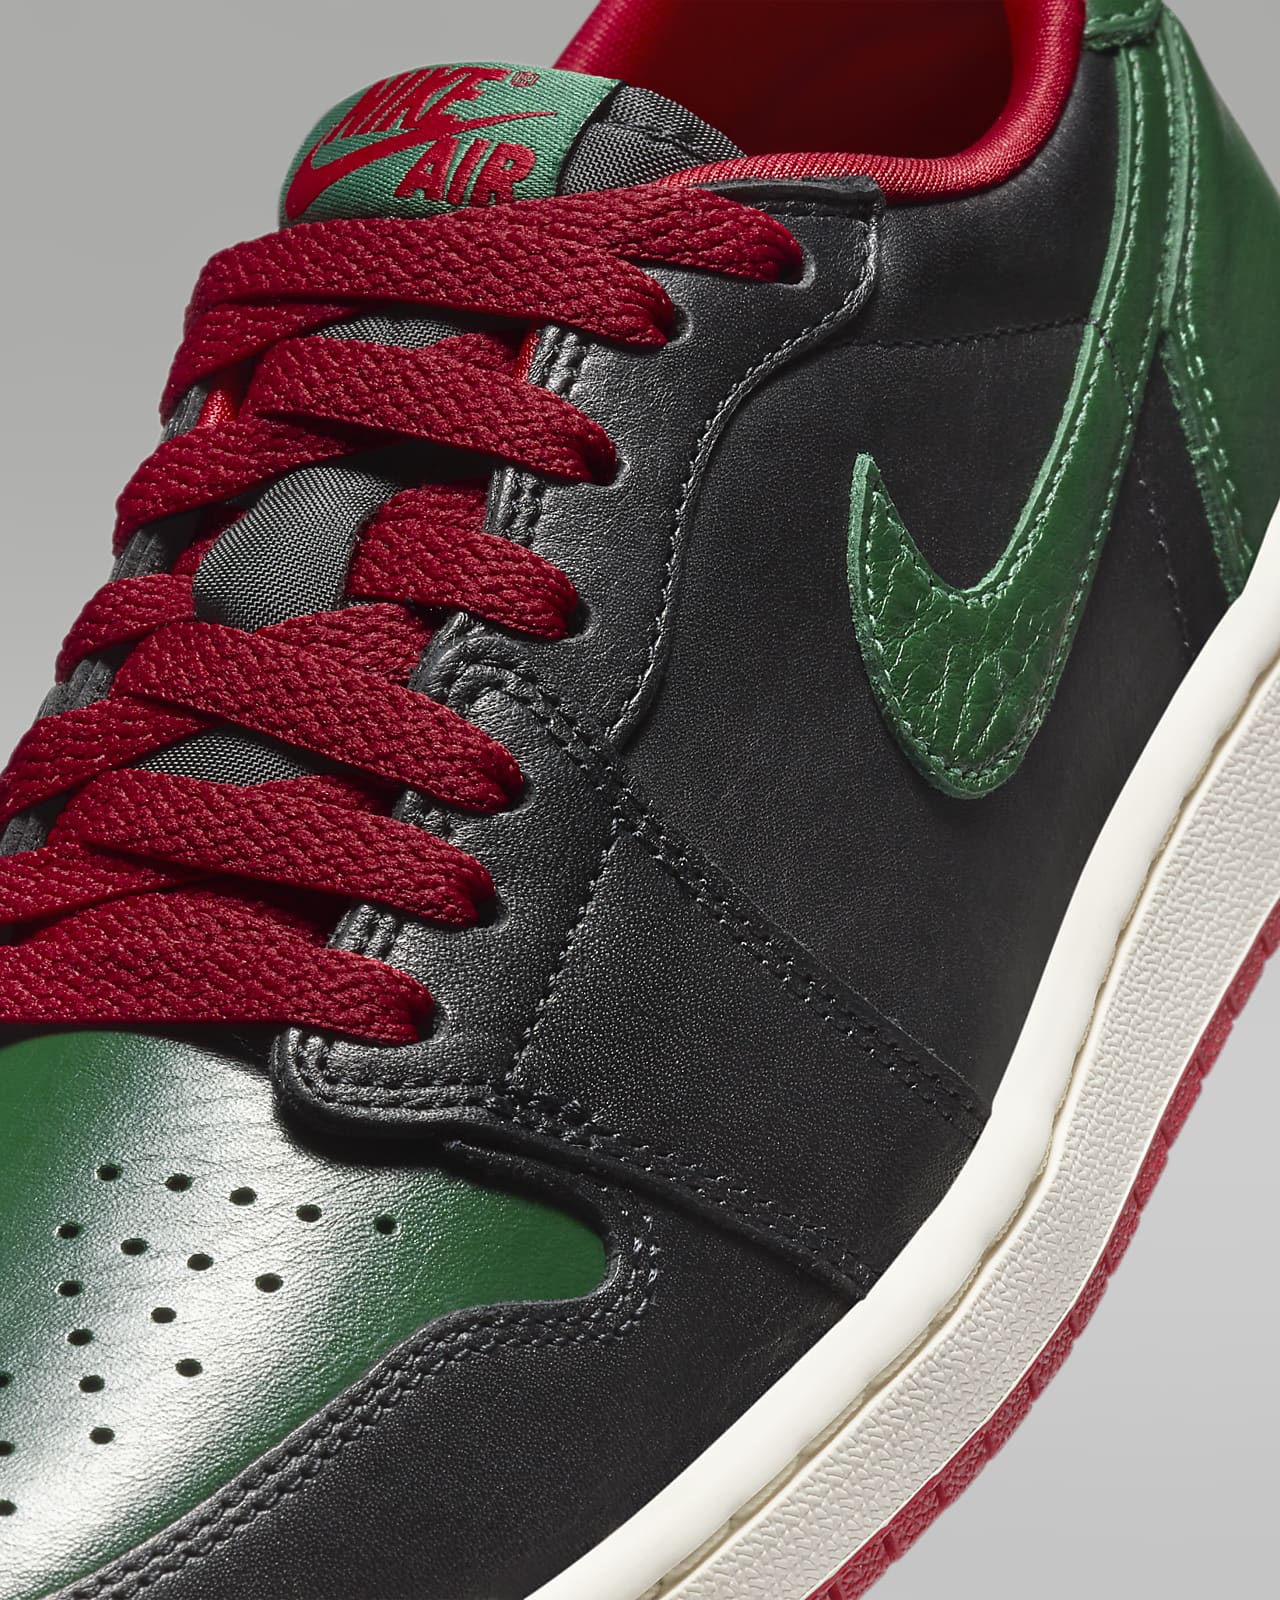 Air Jordan 1 Low OG Black/Gorge Green Women's Shoes